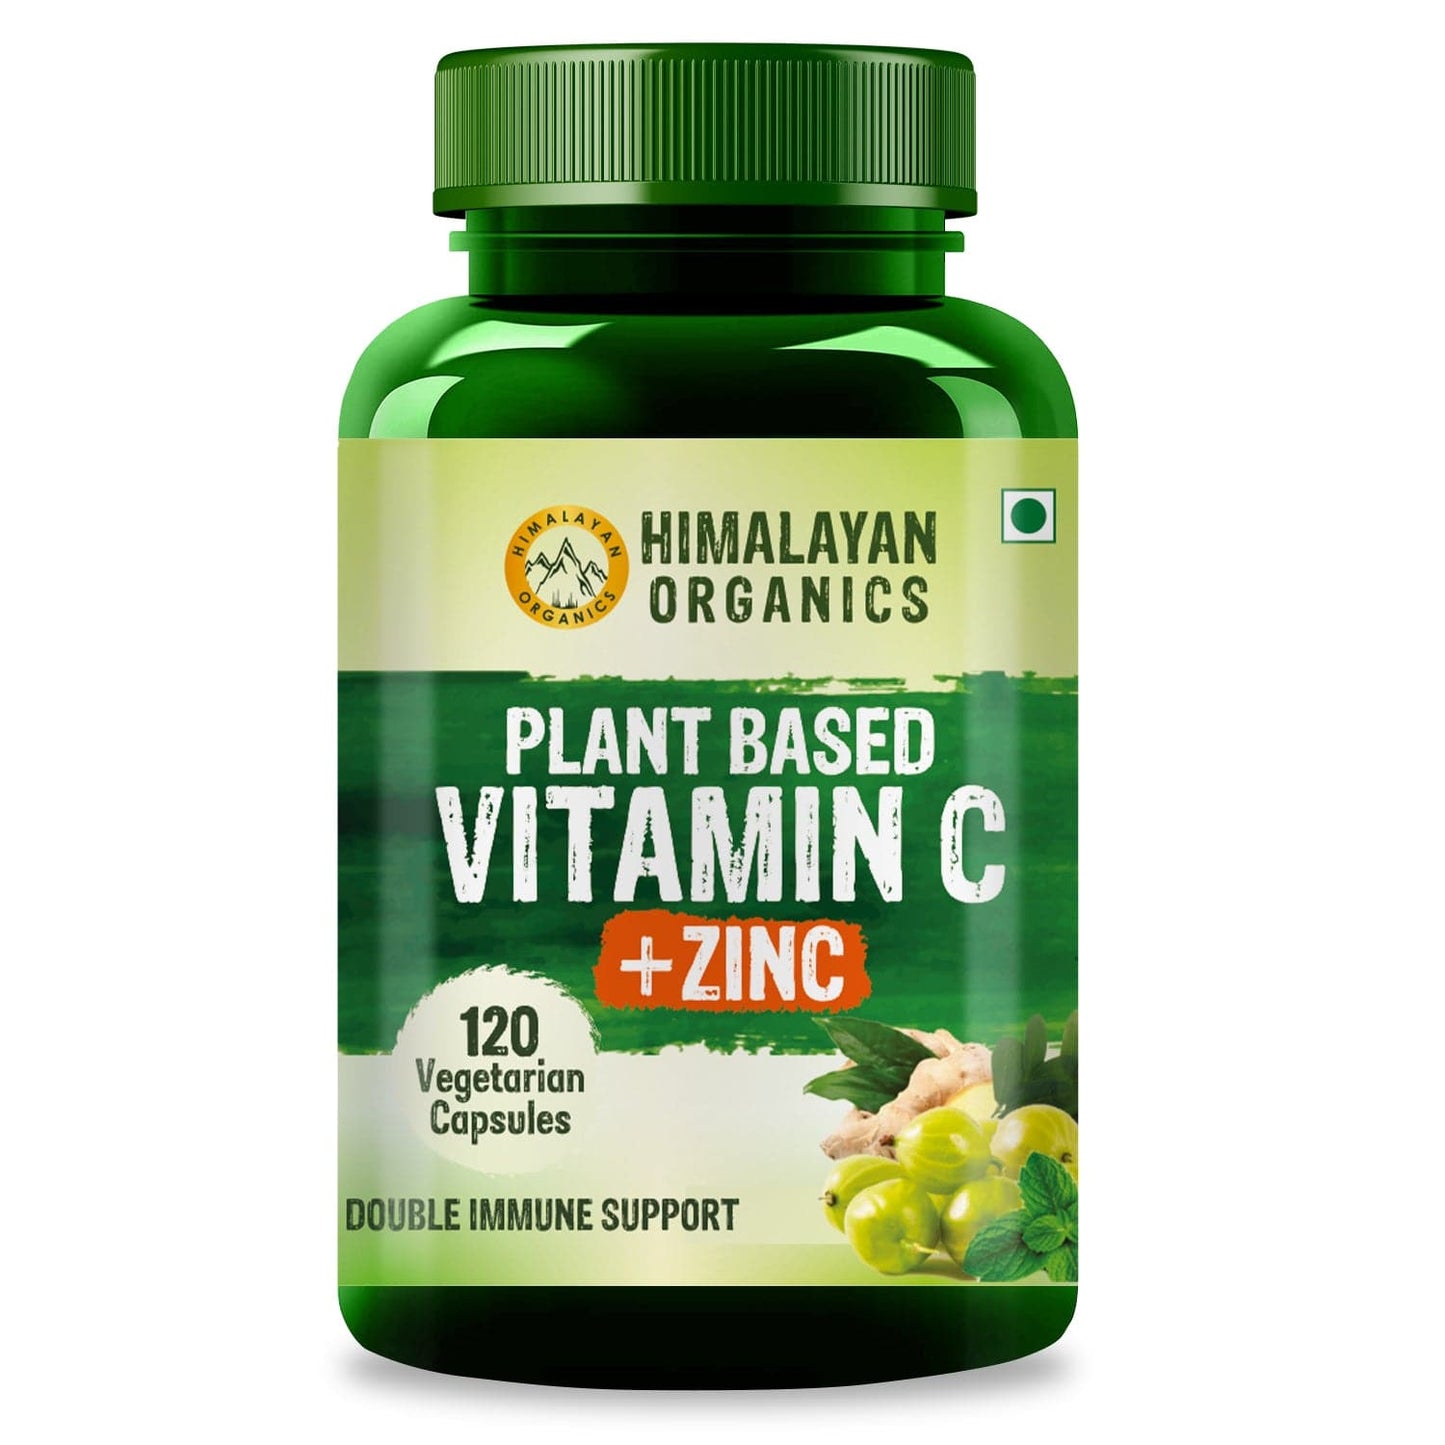 Himalayan Organics Plant Based Vitamin C with Zinc (120 Capsules)